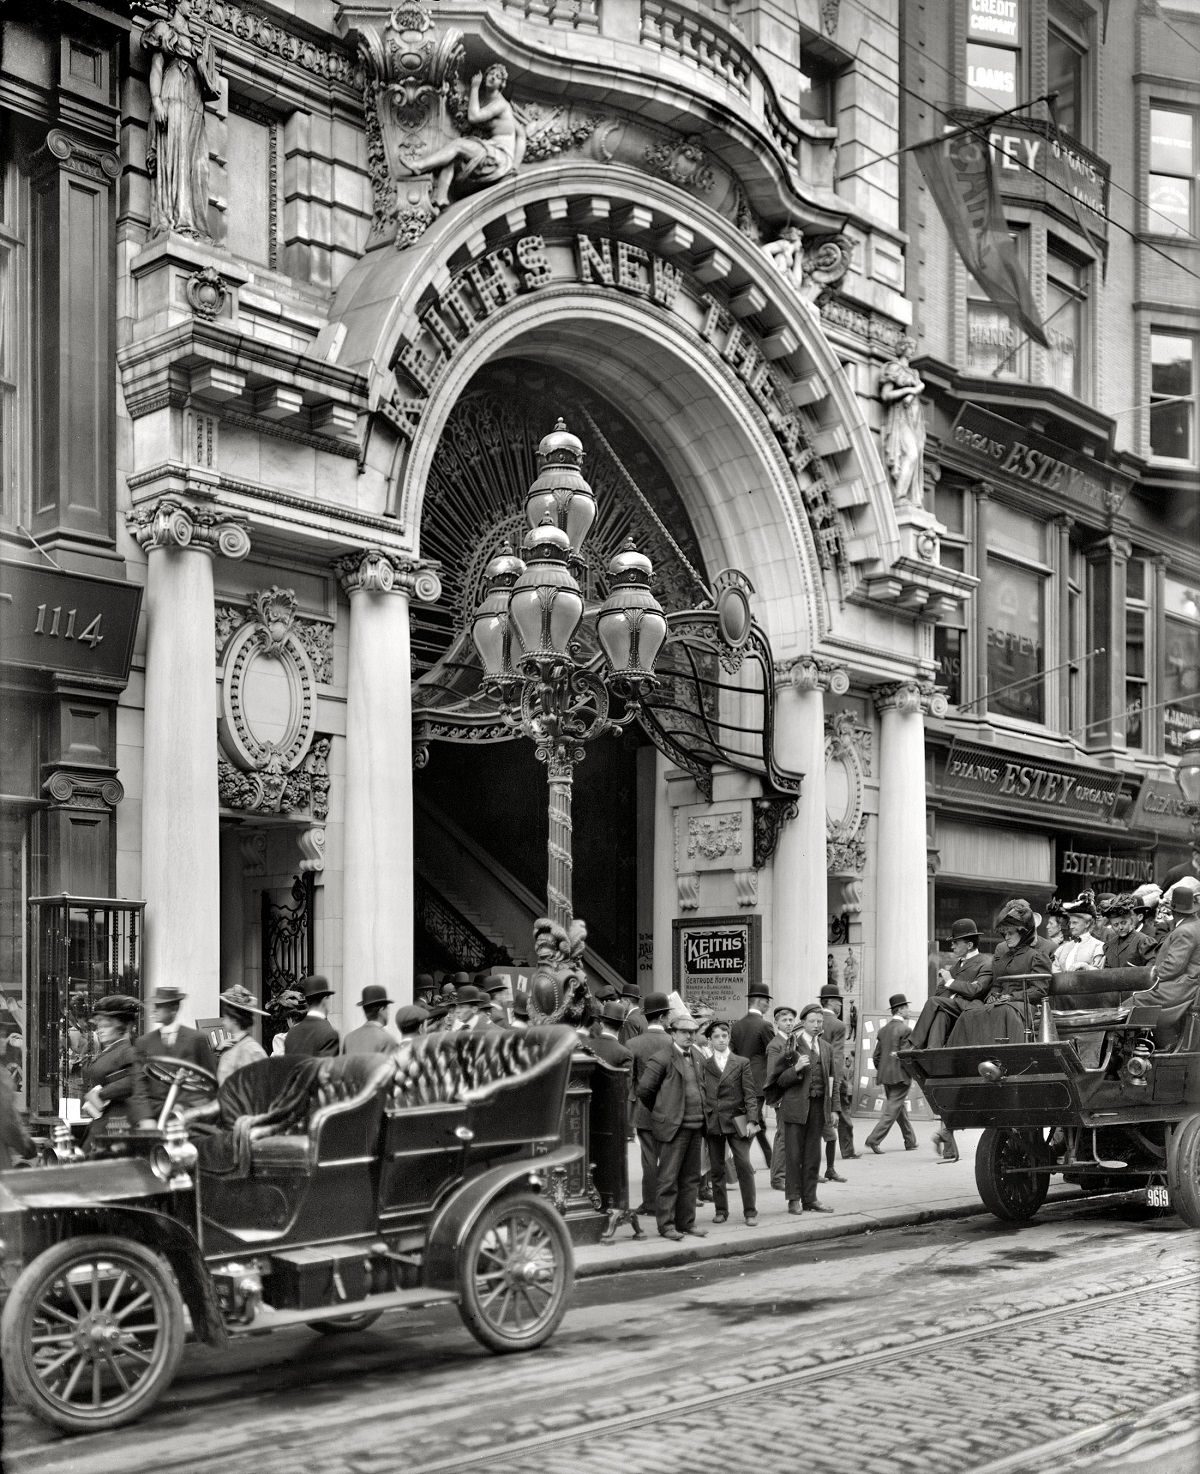 Keith's Theatre Philadelphia circa 1907.